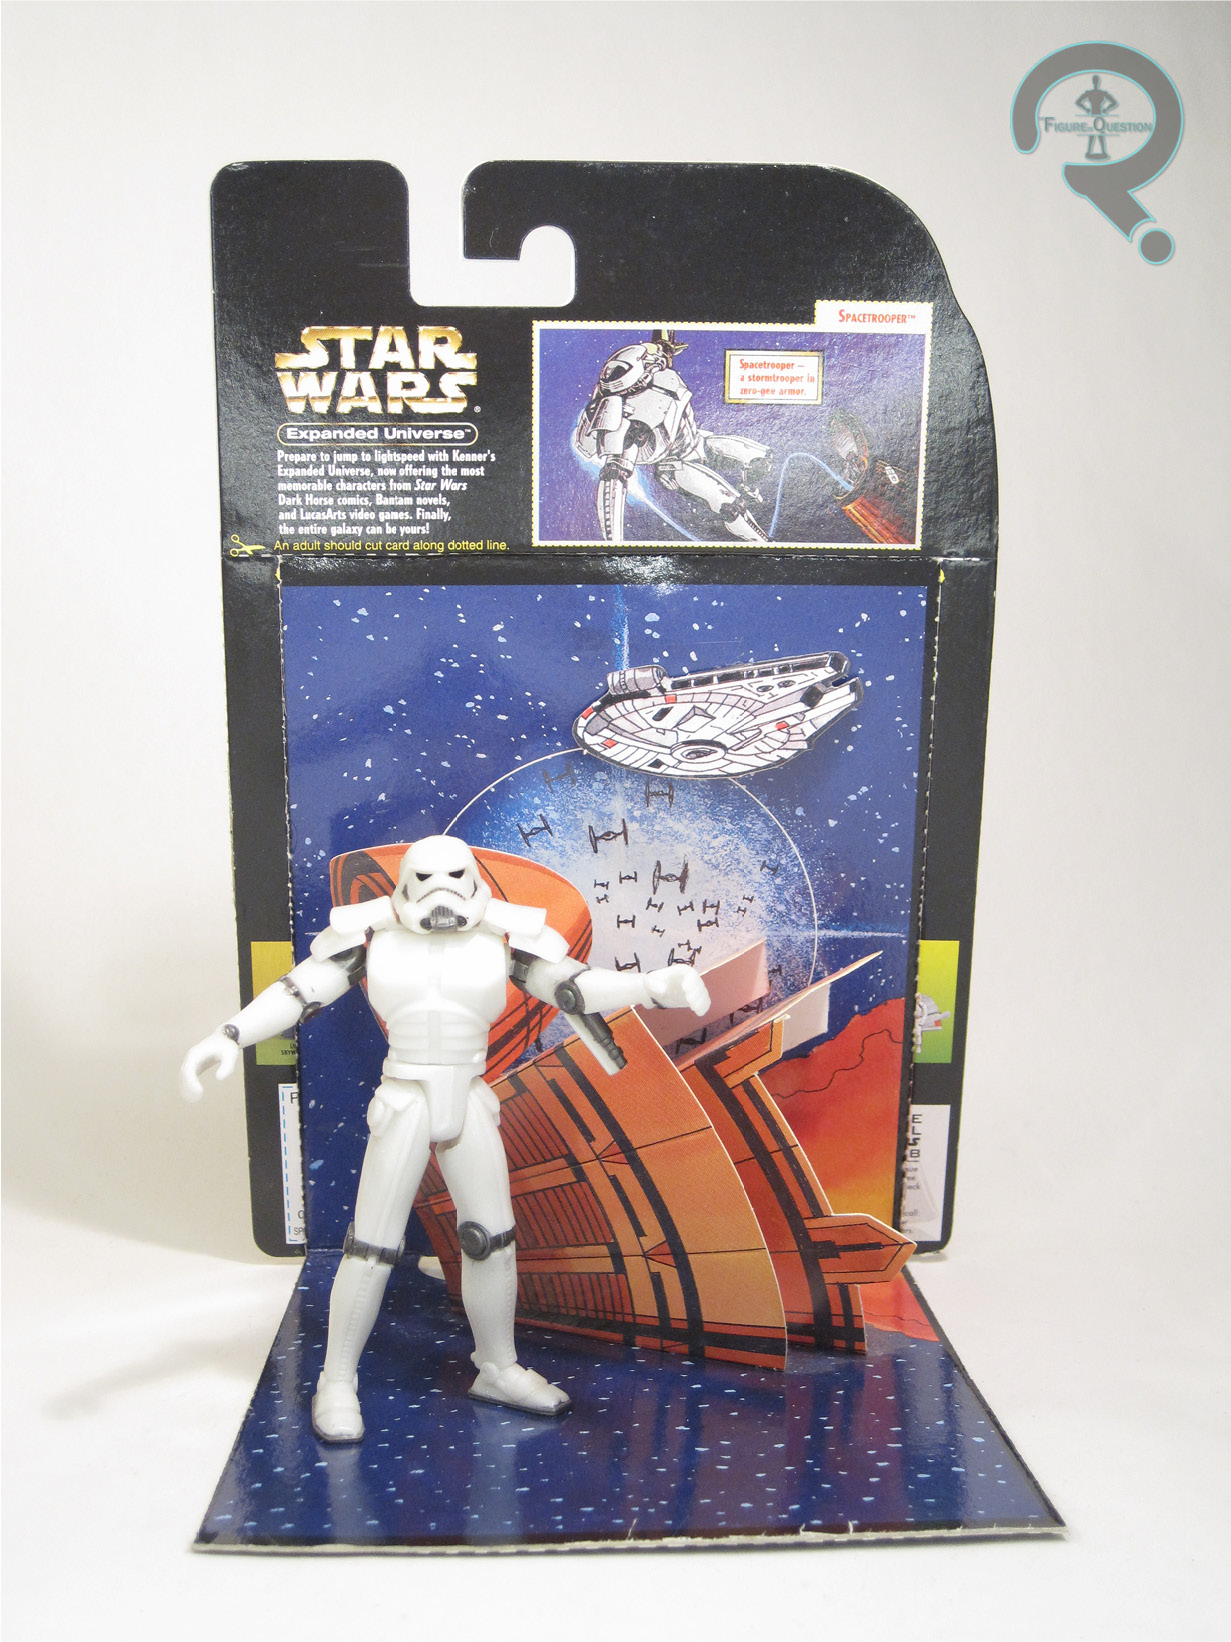 Star Wars Spacetrooper Potf2 Expanded Universe EU Hasbro 1998 for sale online 